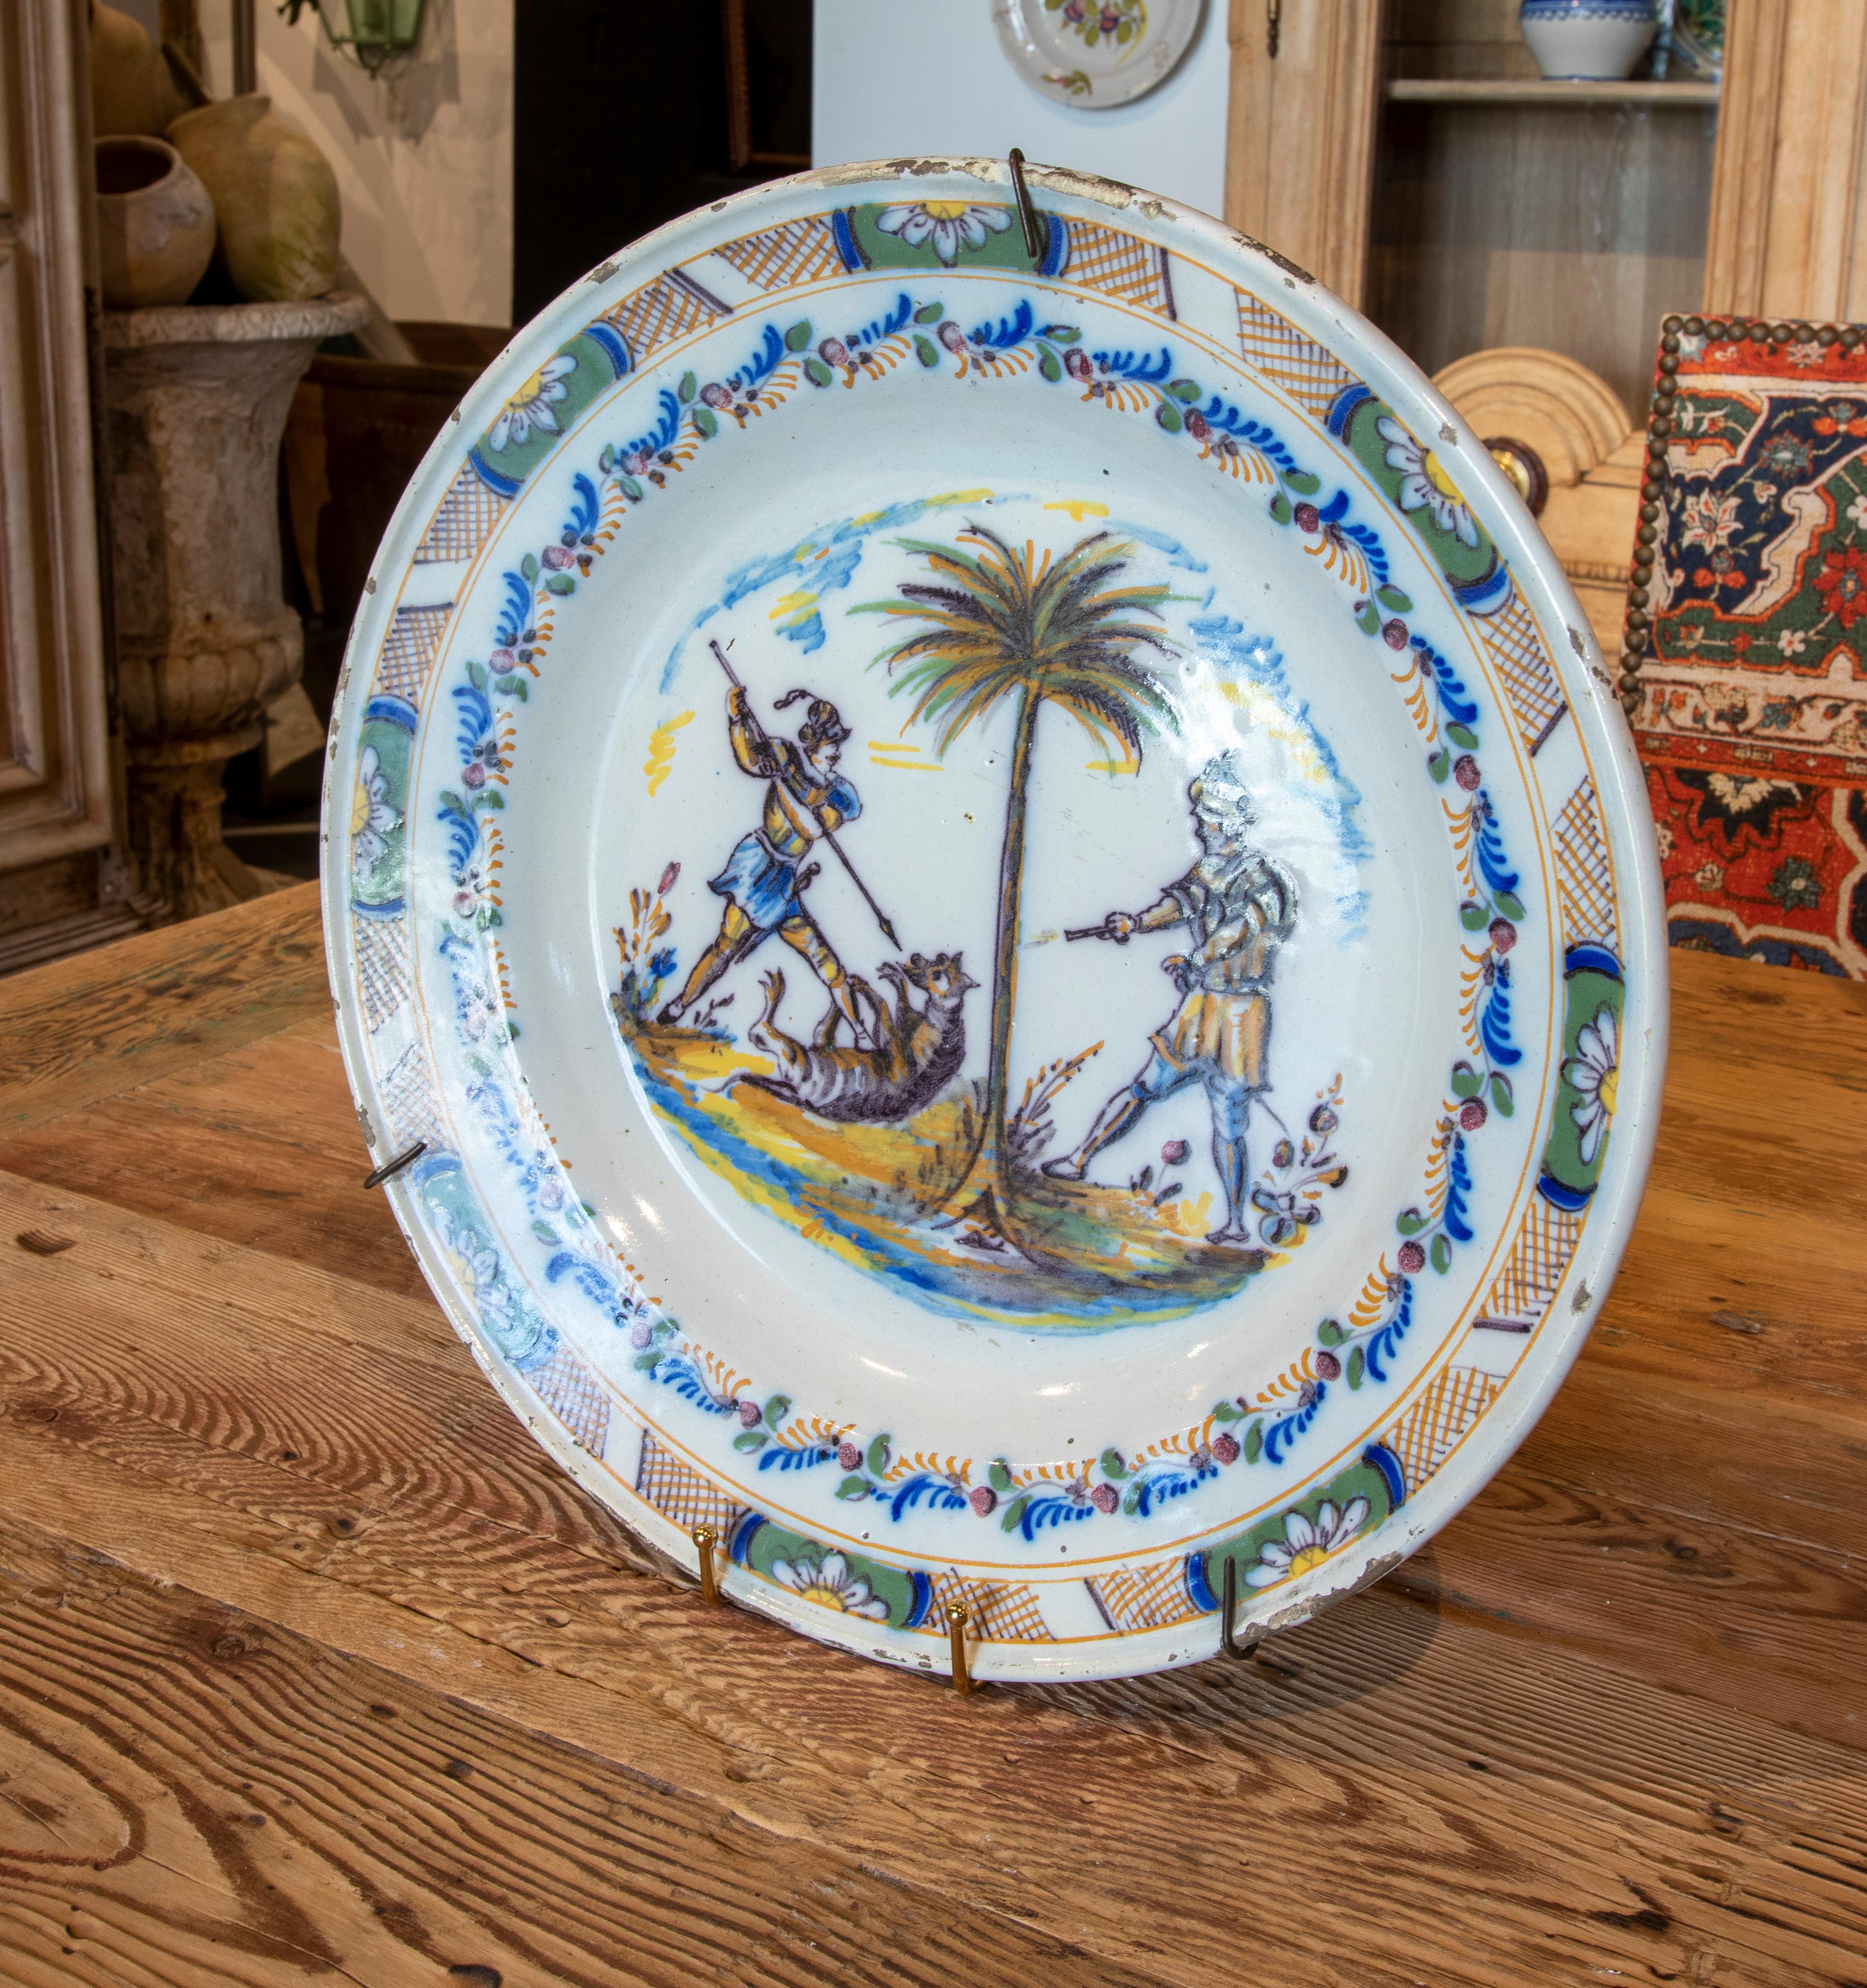 18th Century Spanish hand-painted glazed ceramic plate from Triana.